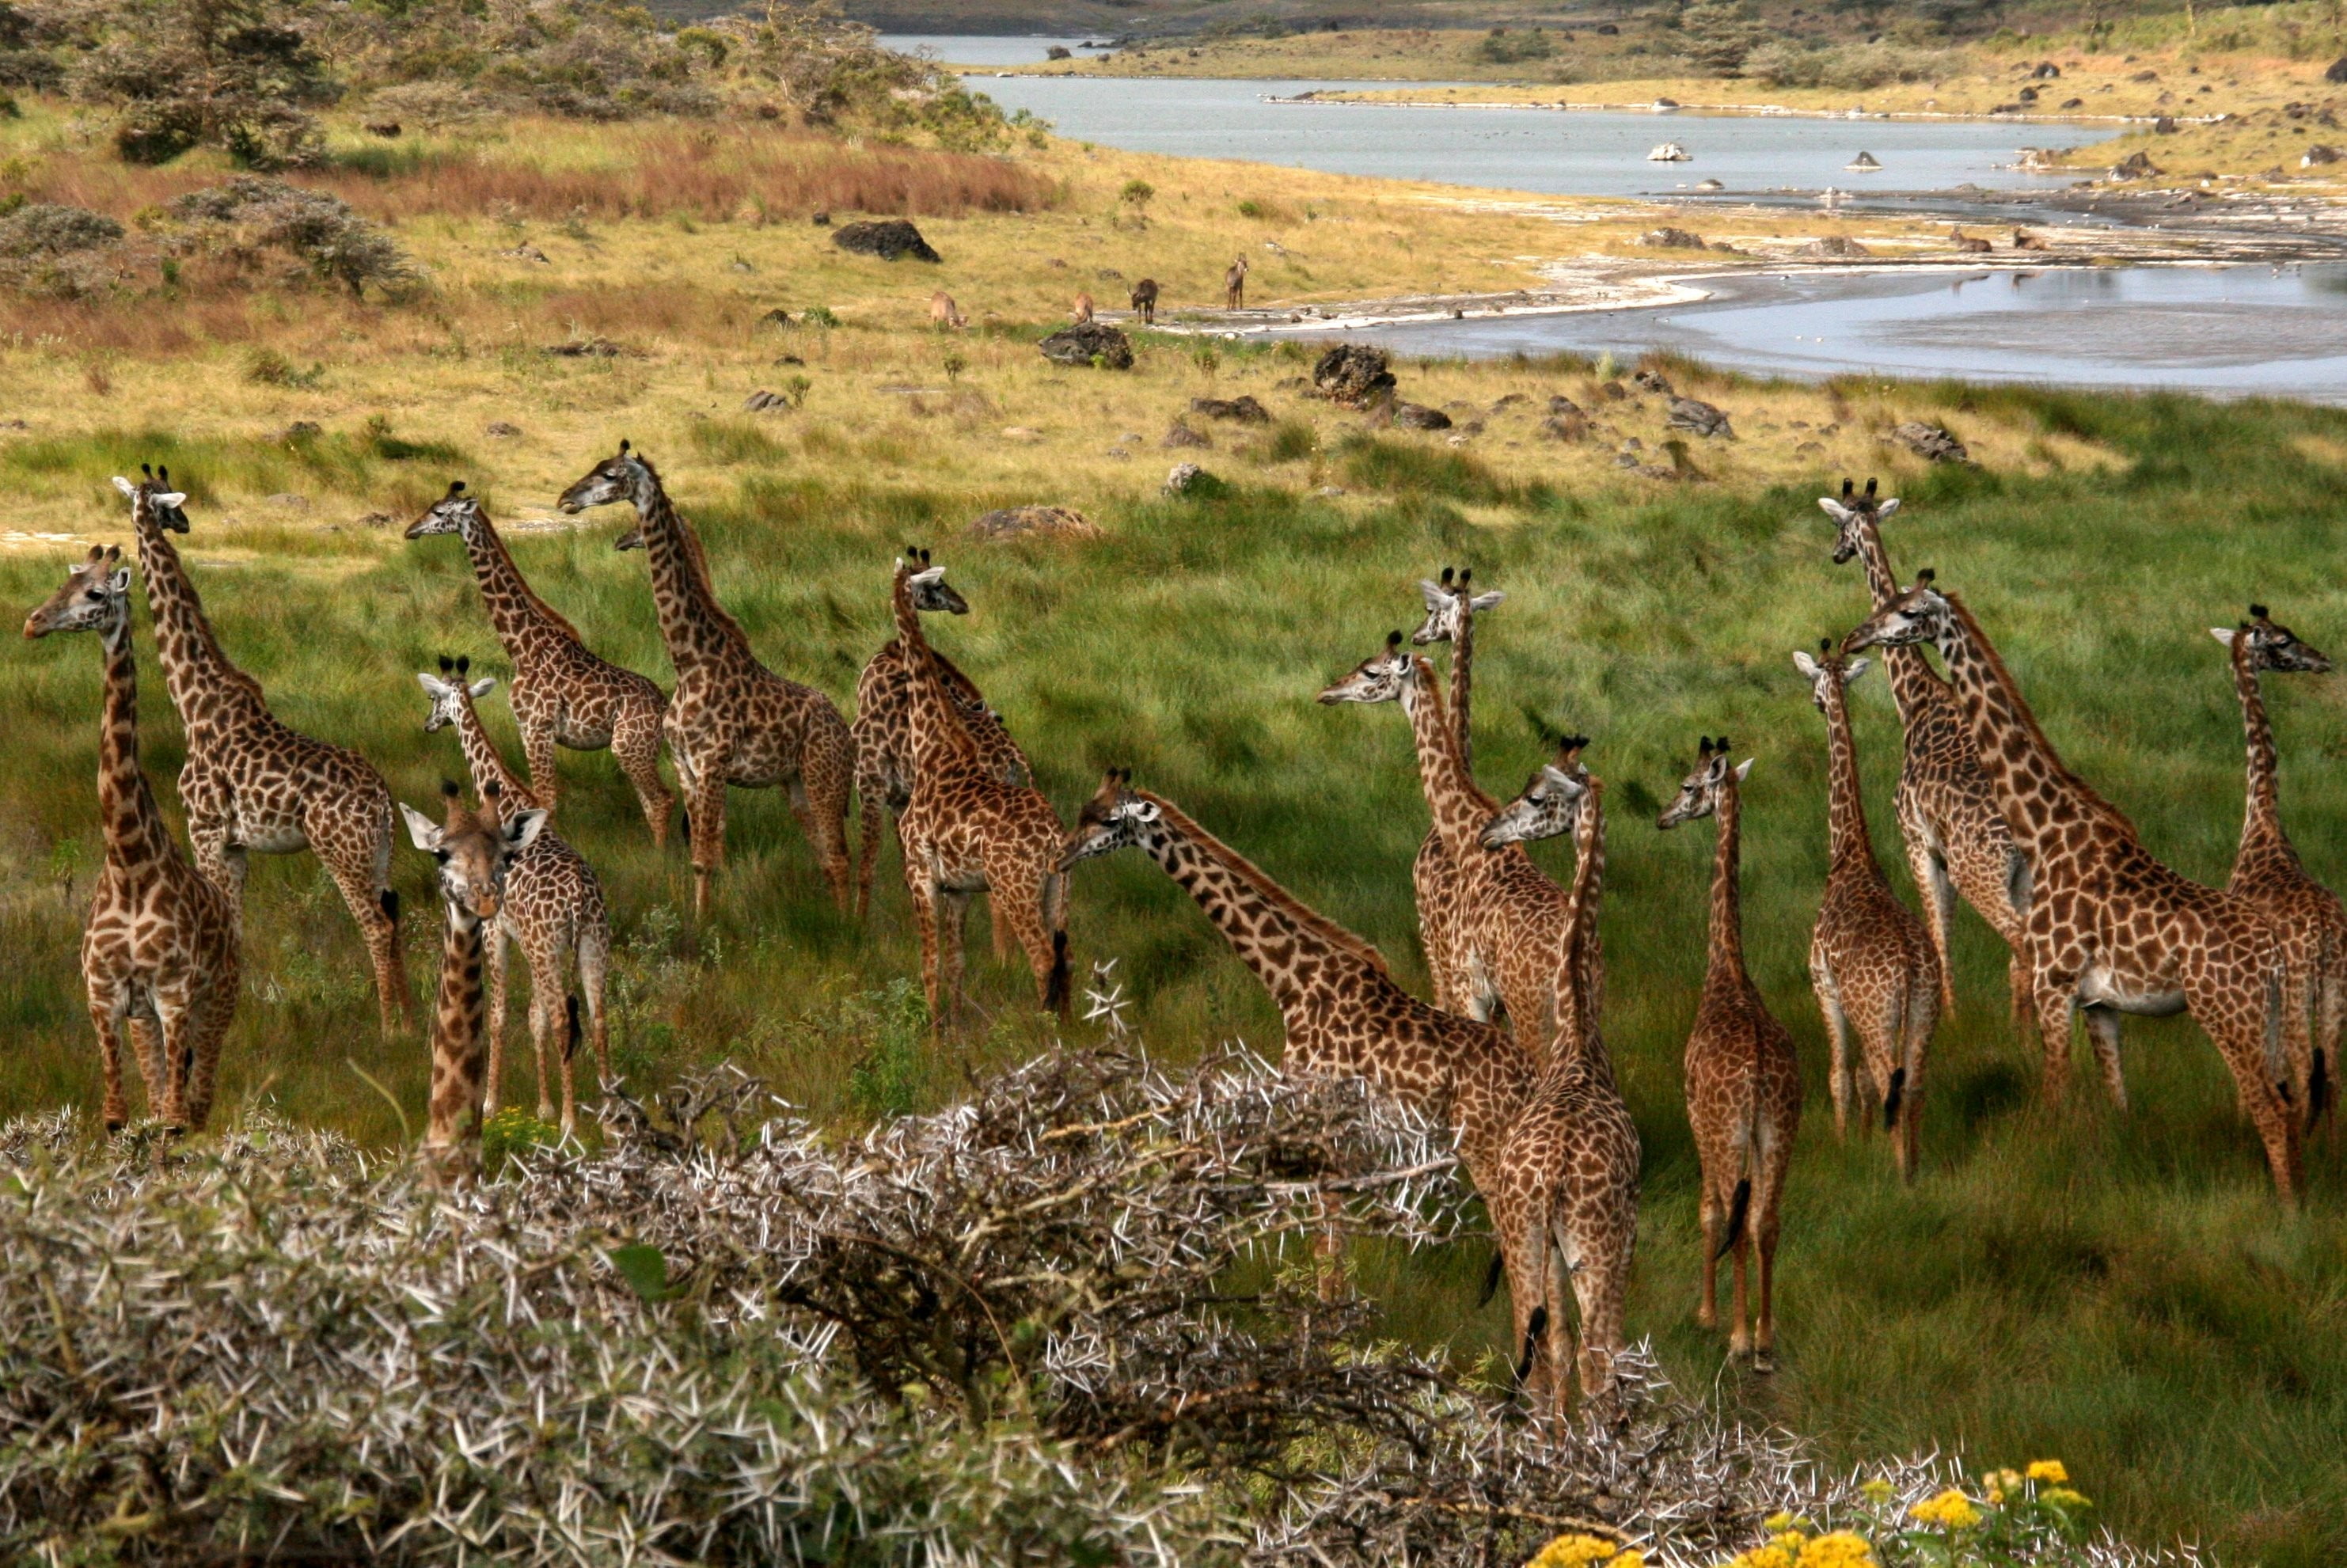 Africa, giraffes, nature, animals, group of animals, animal themes